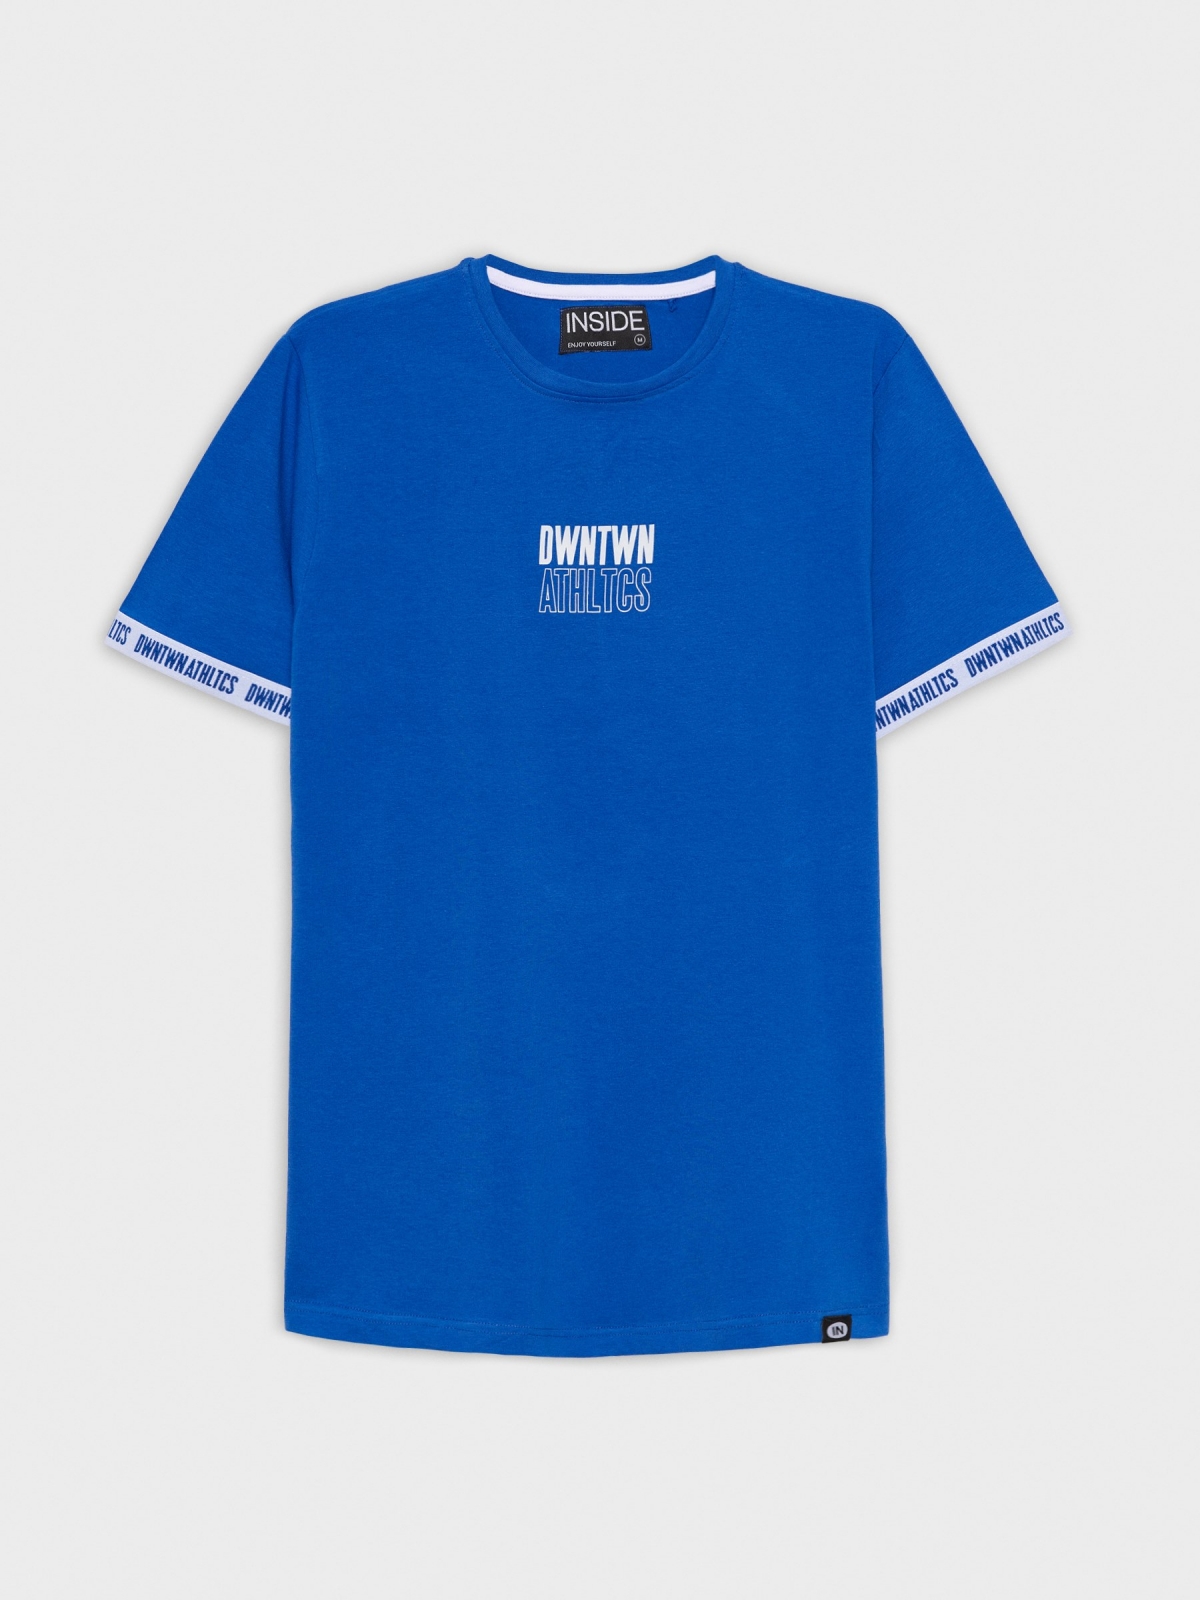  T-shirt ATHLTCS azul eléctrico